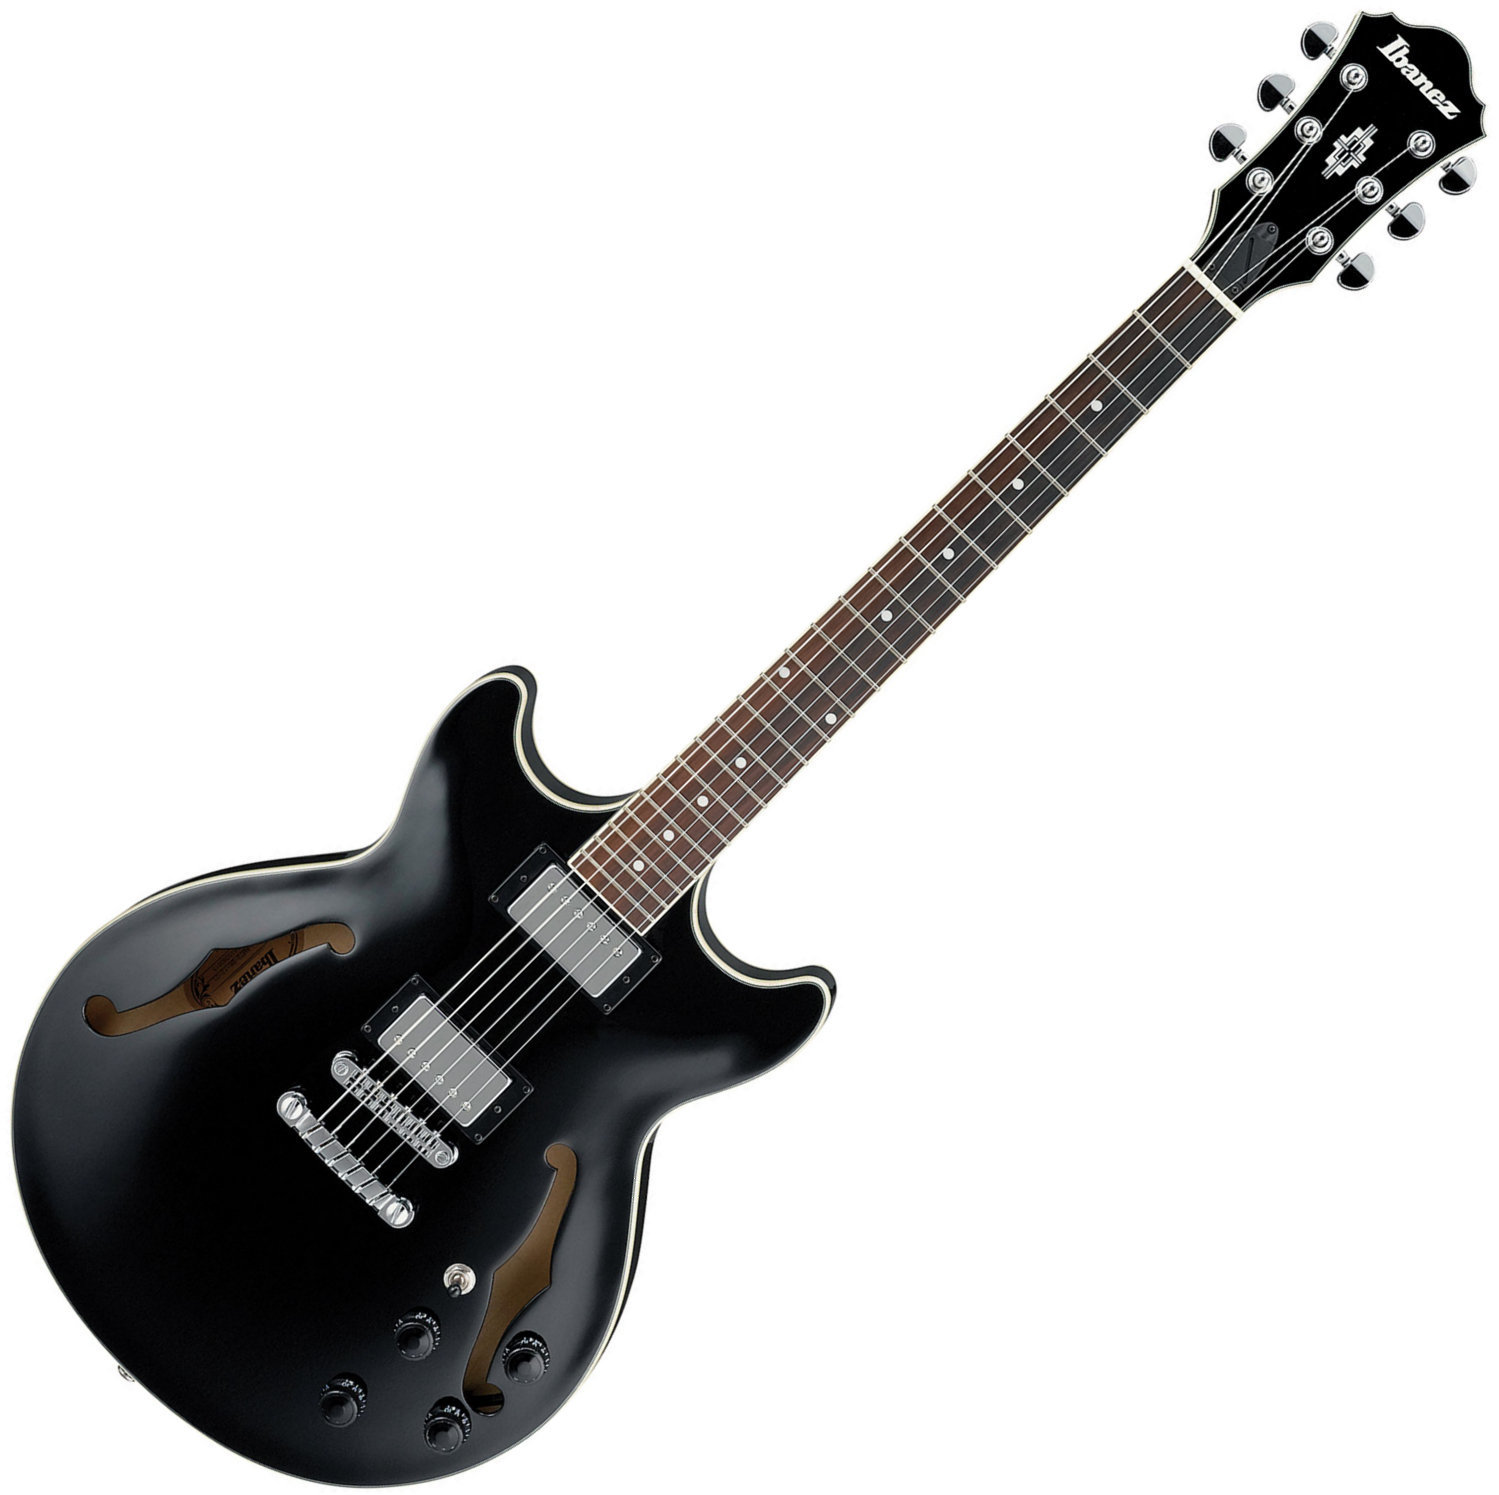 Semiakustická gitara Ibanez AM73 Black